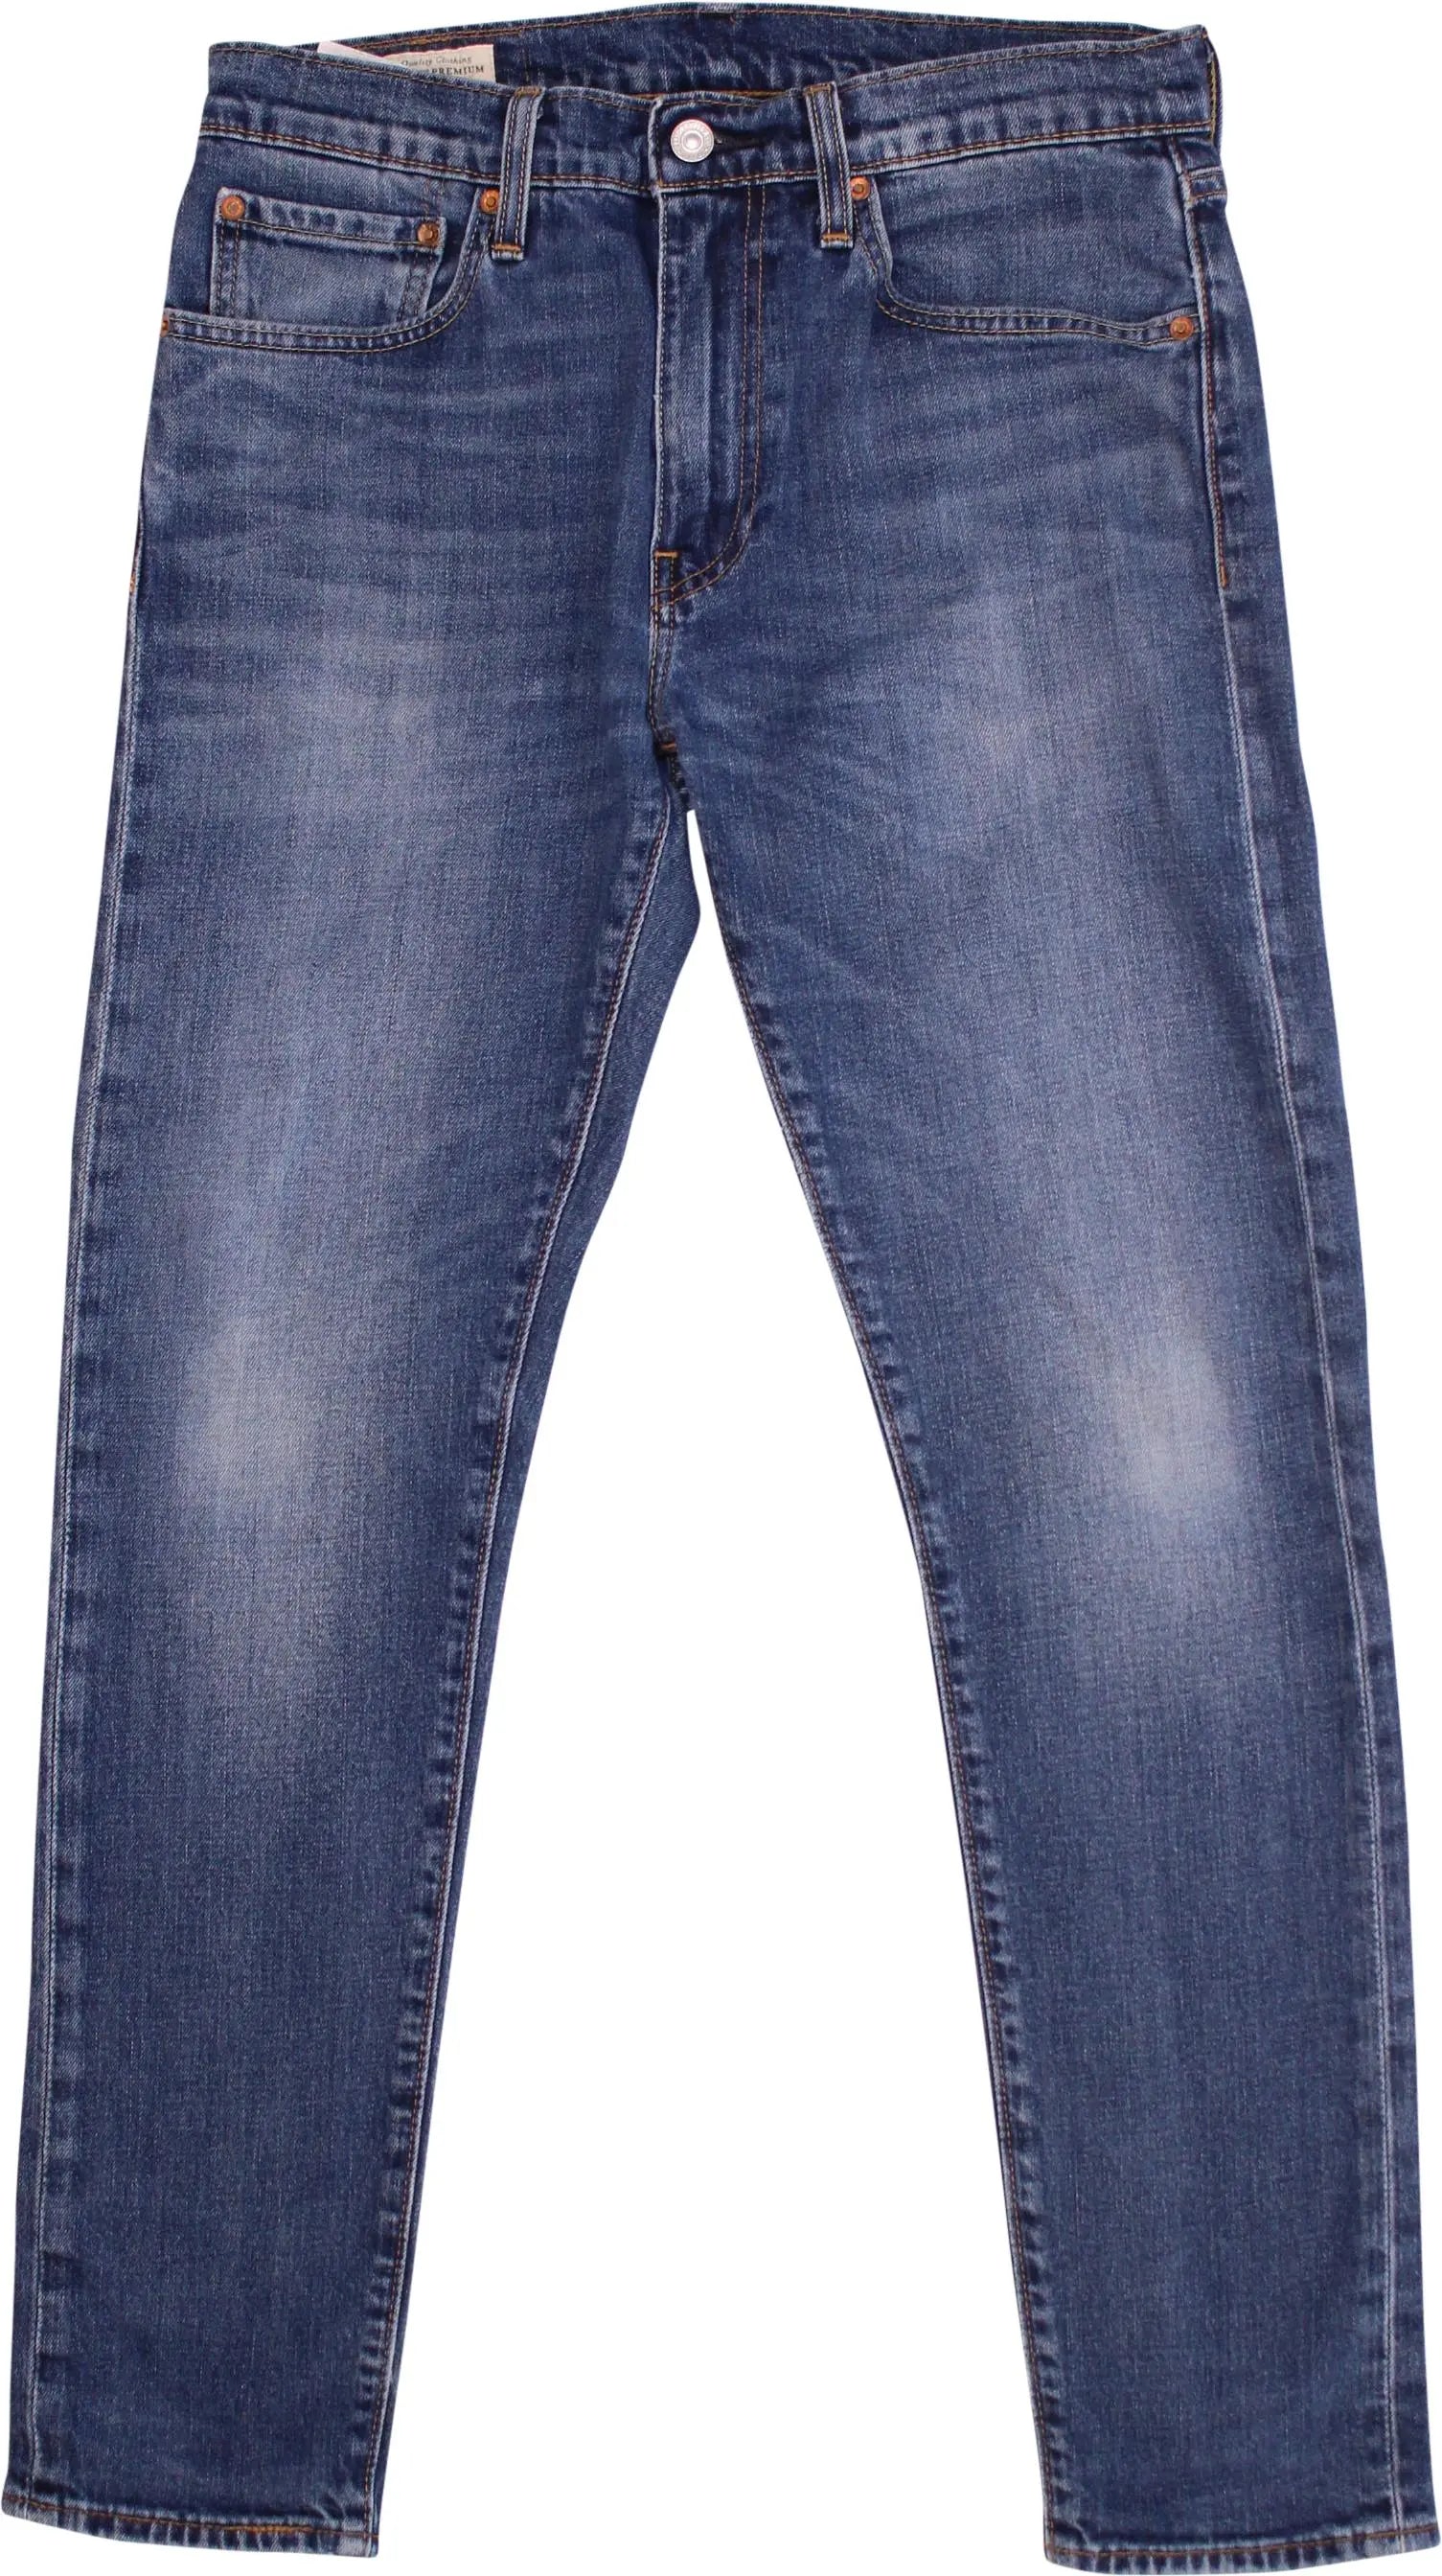 Levi's - Levi's 512 Slim Fit Jeans- ThriftTale.com - Vintage and second handclothing